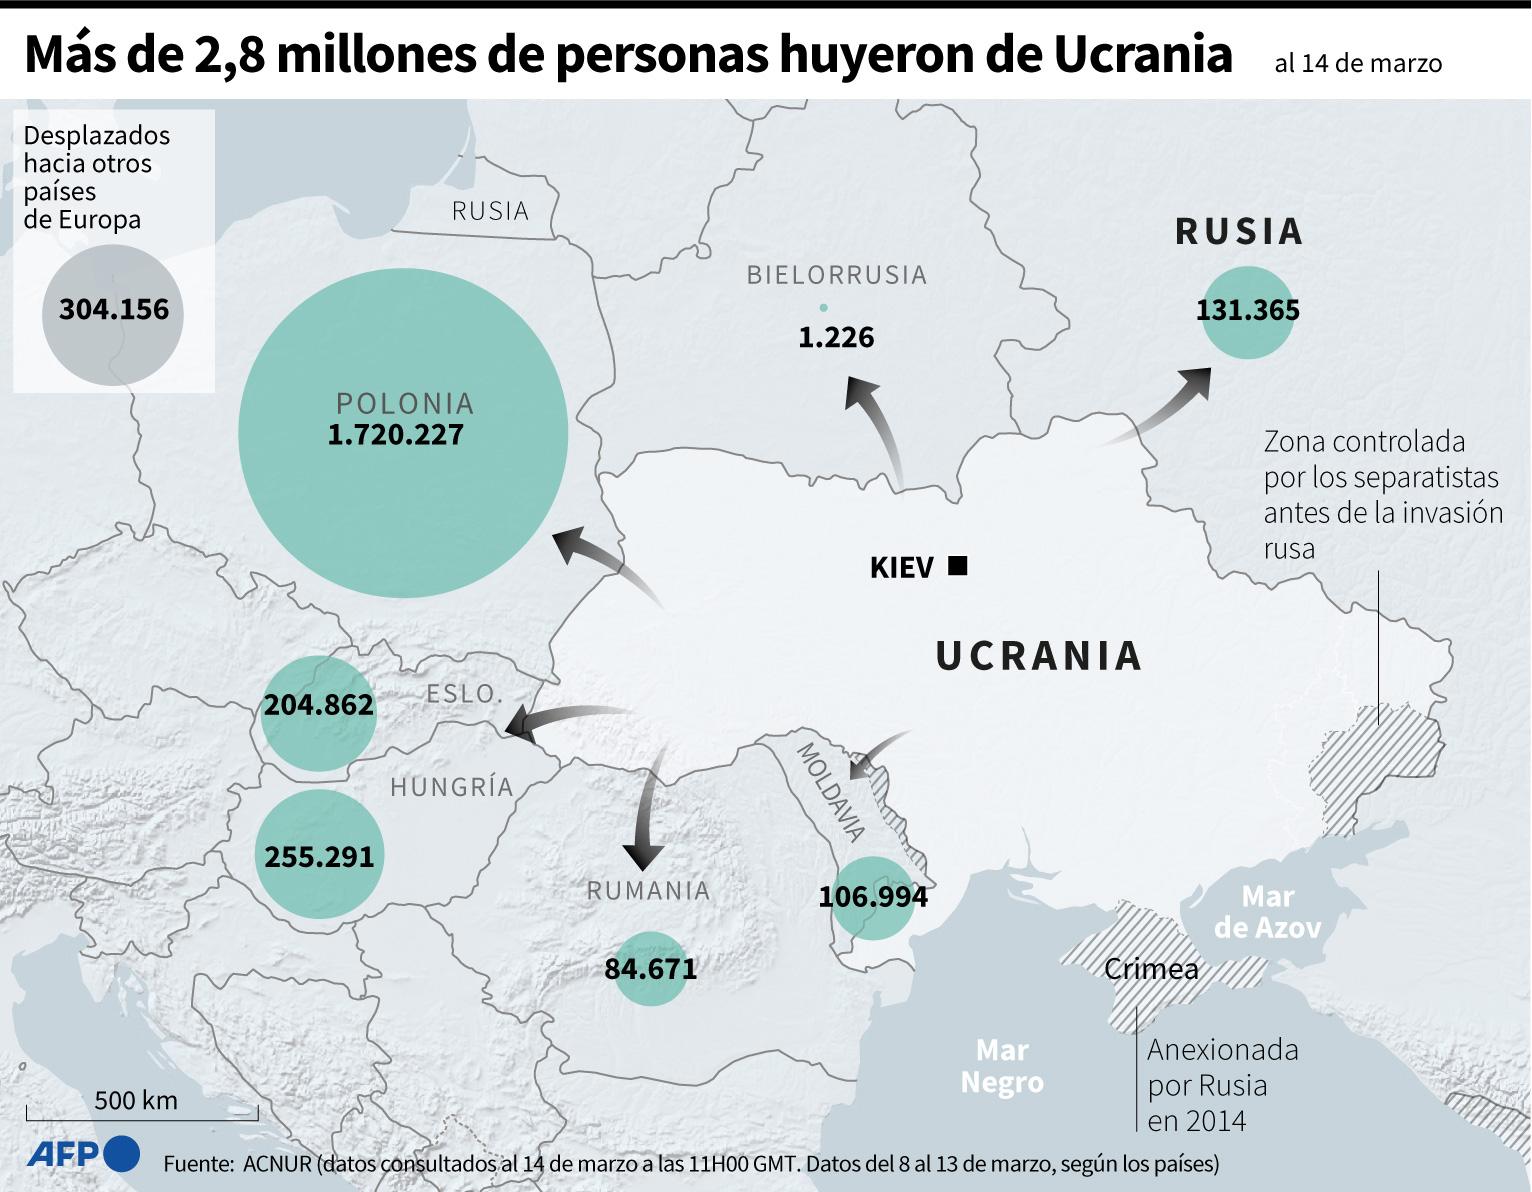 EEUU se compromete a acoger a hasta 100,000 refugiados ucranianos